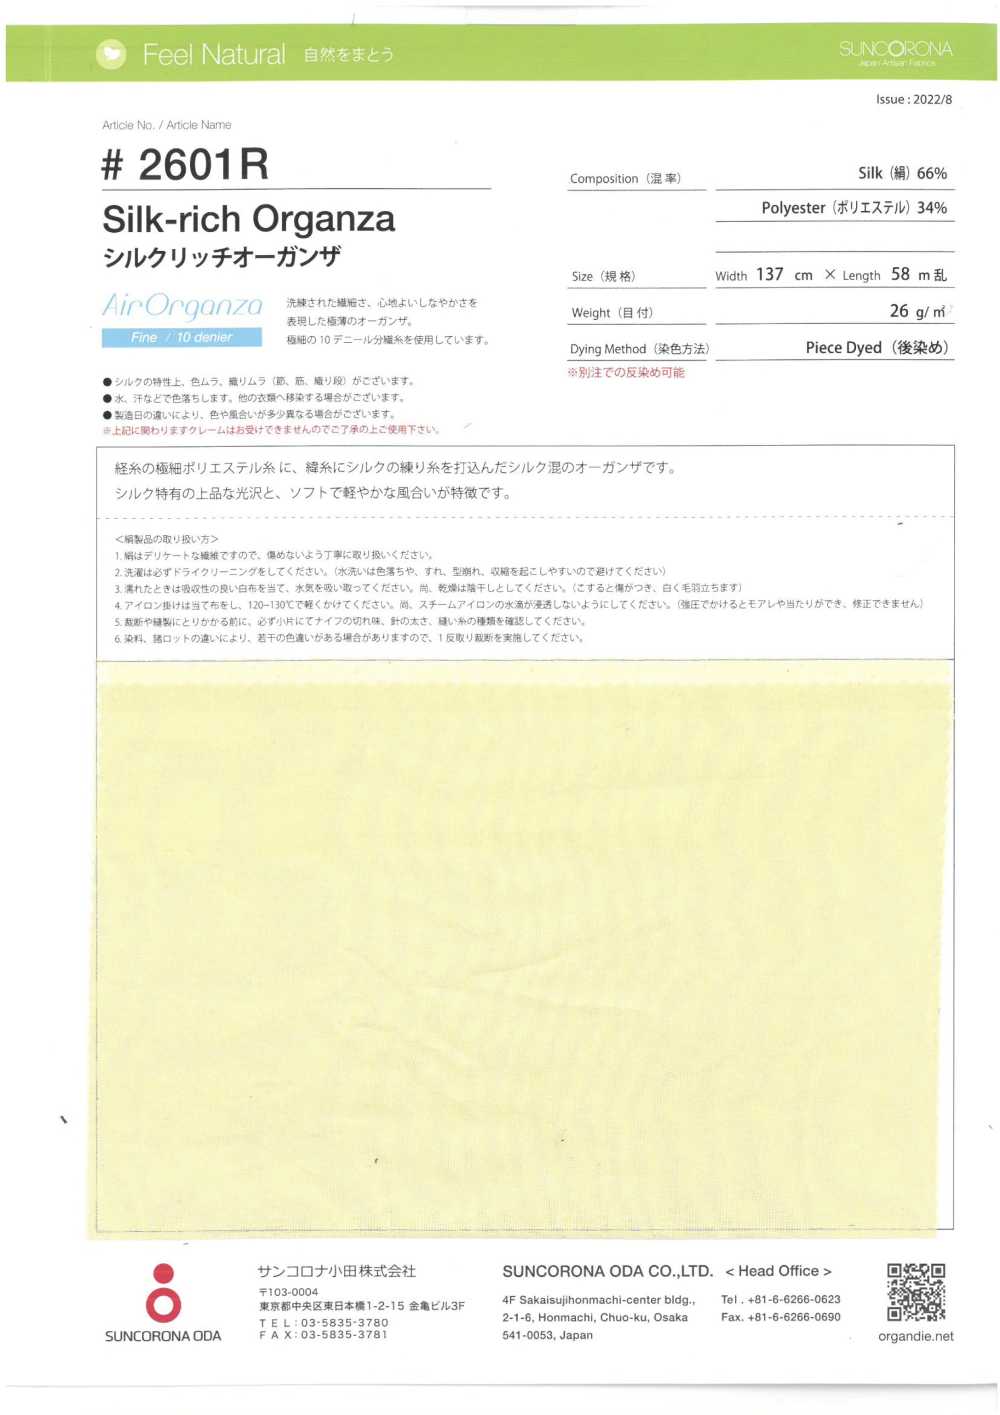 2601R Silk Rich Organdy[Textile / Fabric] Suncorona Oda